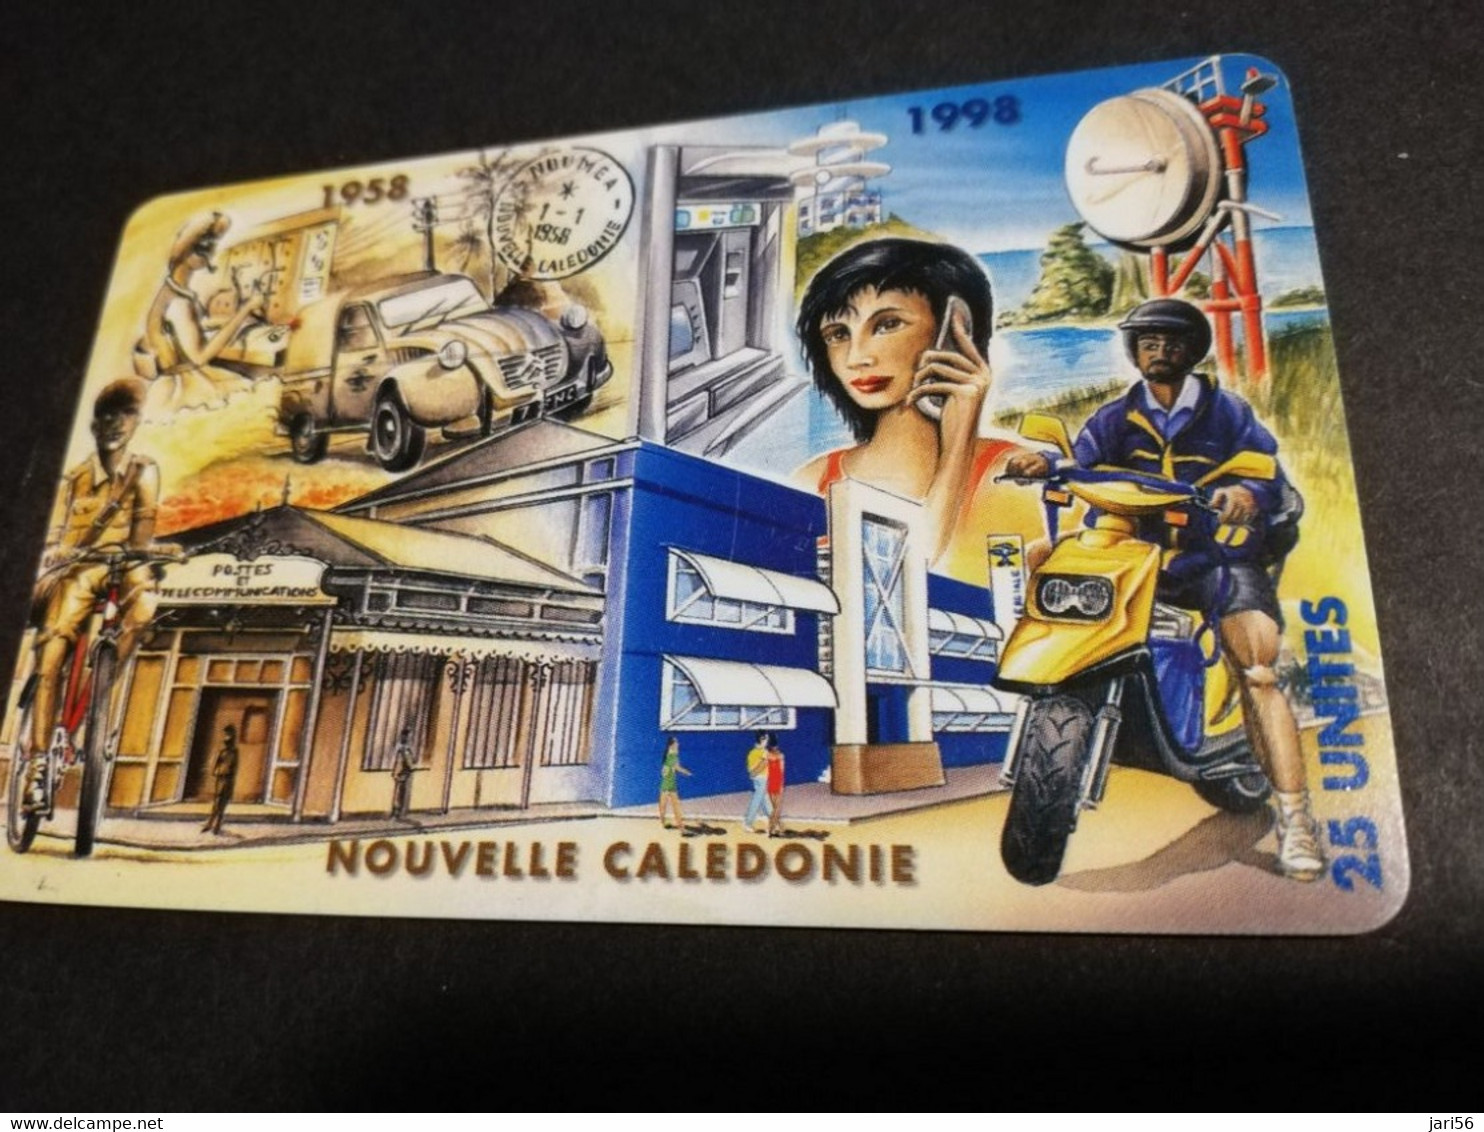 NOUVELLE CALEDONIA  CHIP CARD 25  UNITS   40EME ANNIVERSAIRE 1958-1998       ** 4186 ** - Nuova Caledonia